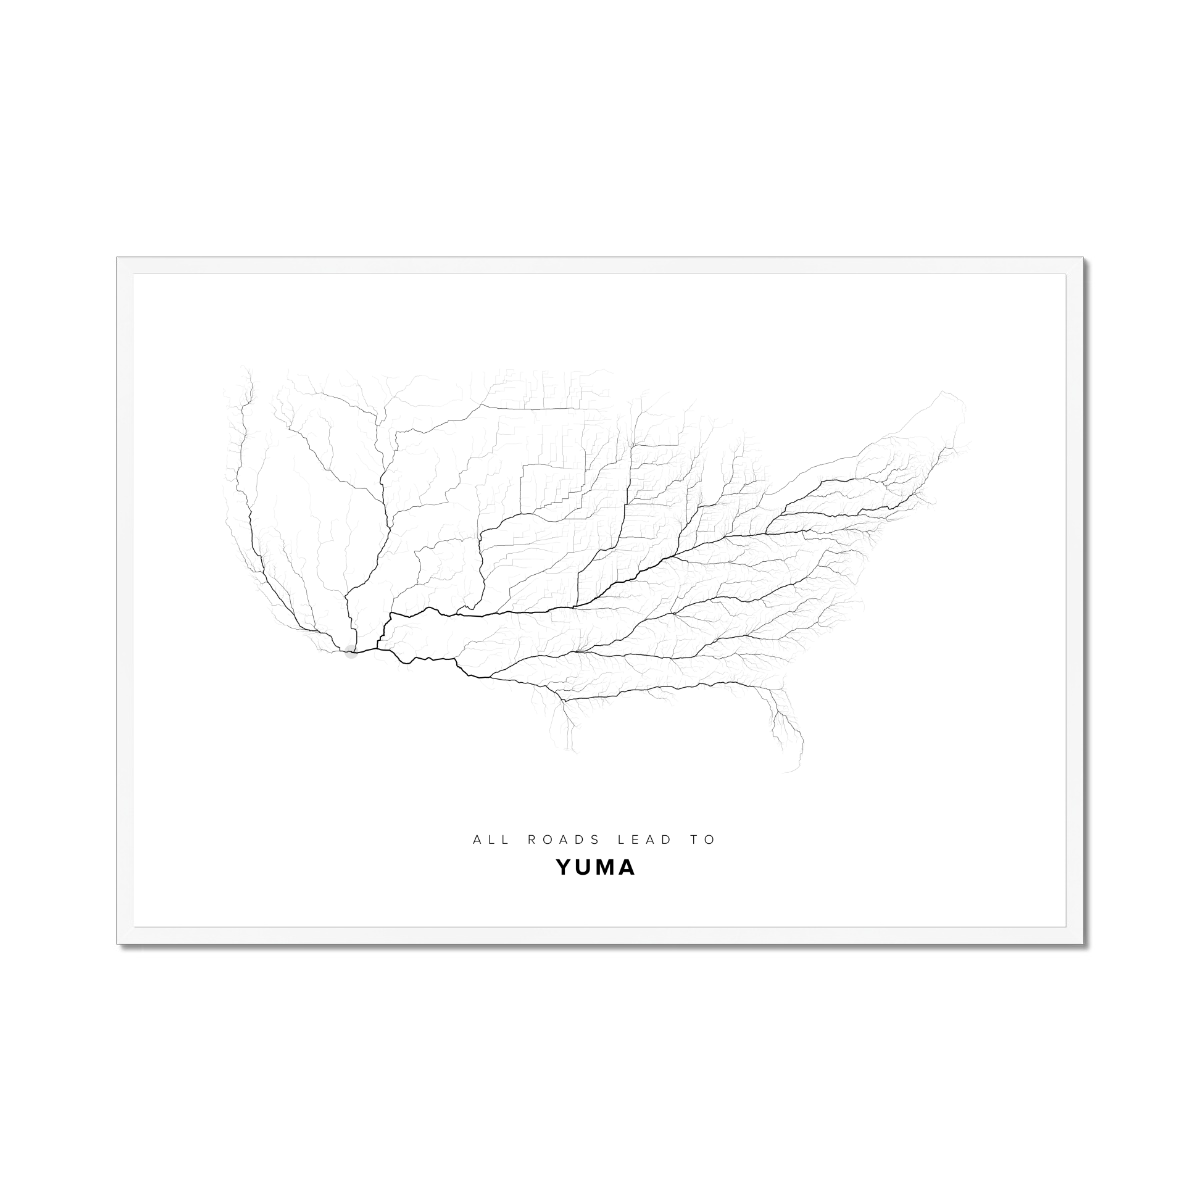 All roads lead to Yuma (United States of America) Fine Art Map Print